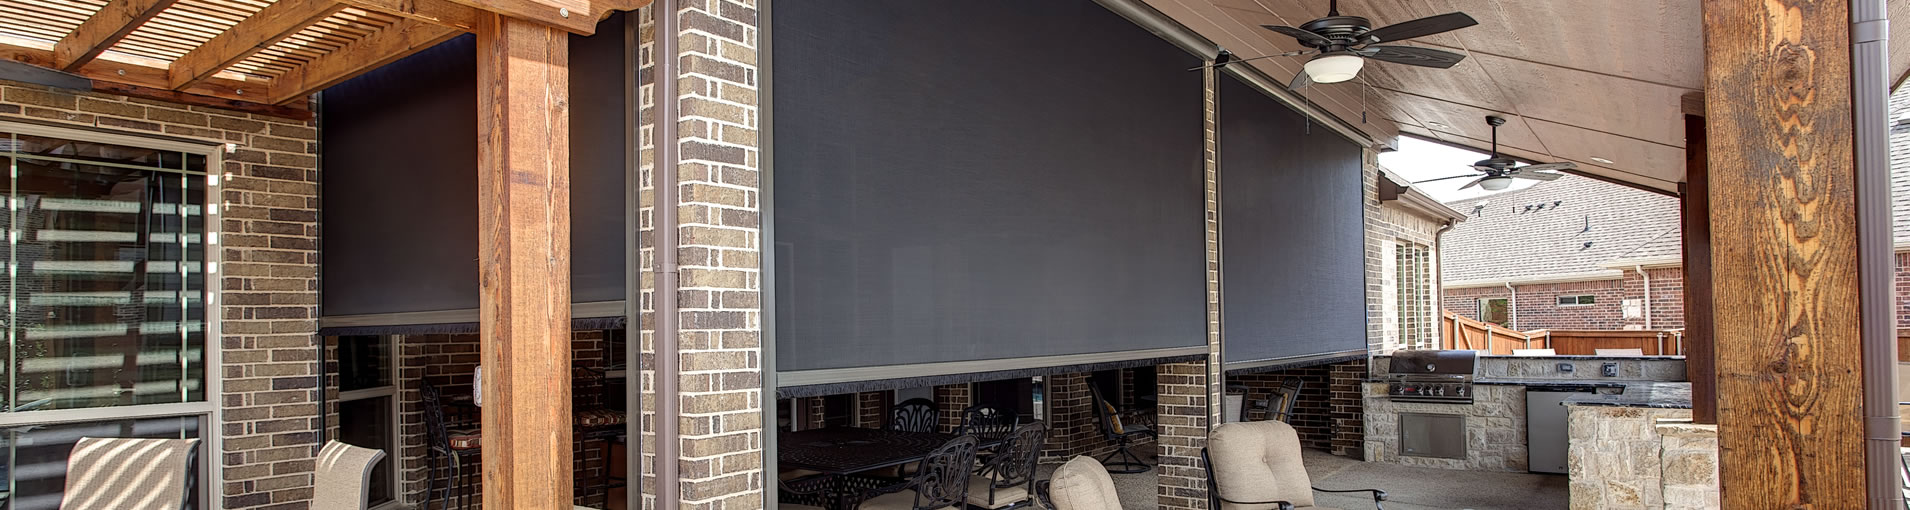 Miami Motorized retractable screens for outdoor porches, patios and decks | Rollos